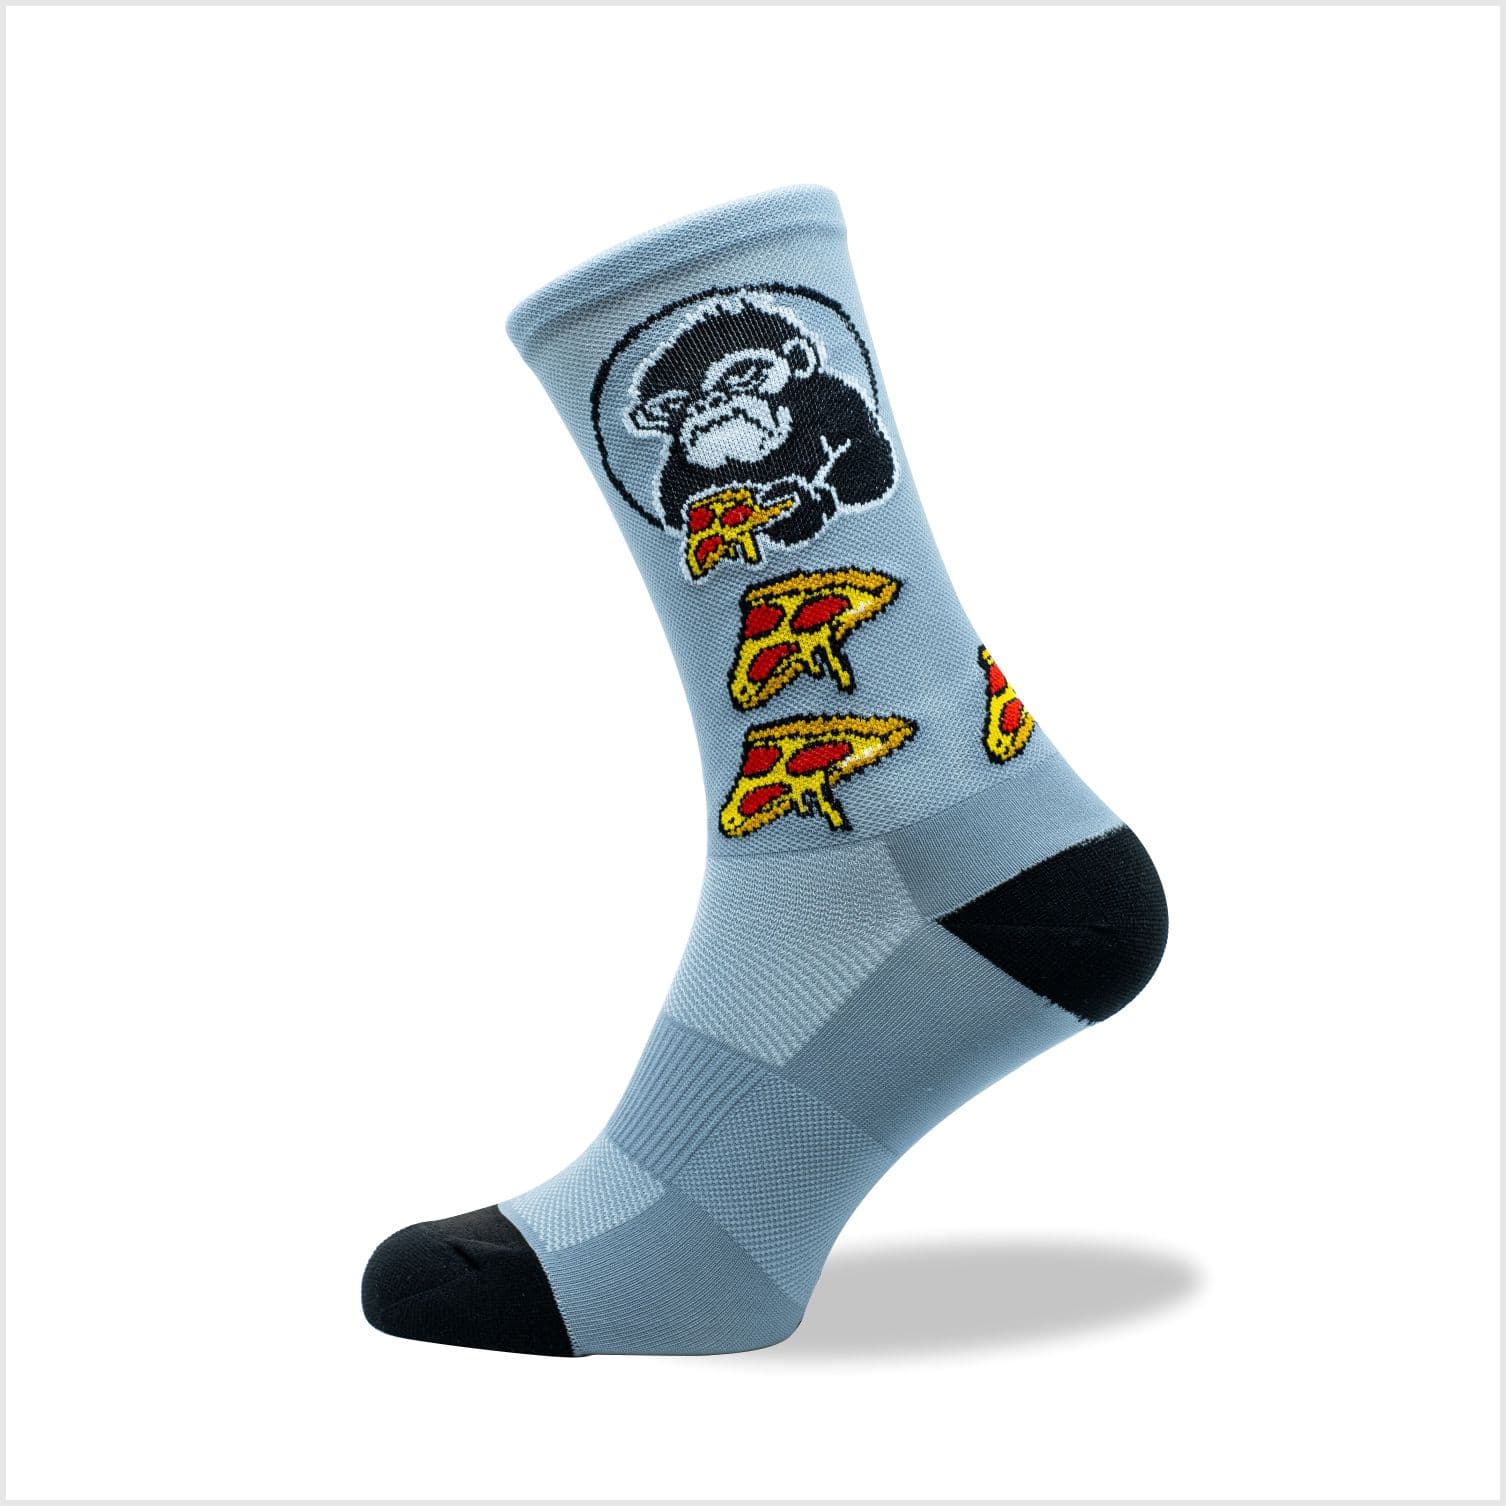 Grumpy Monkey - Knitted Socks